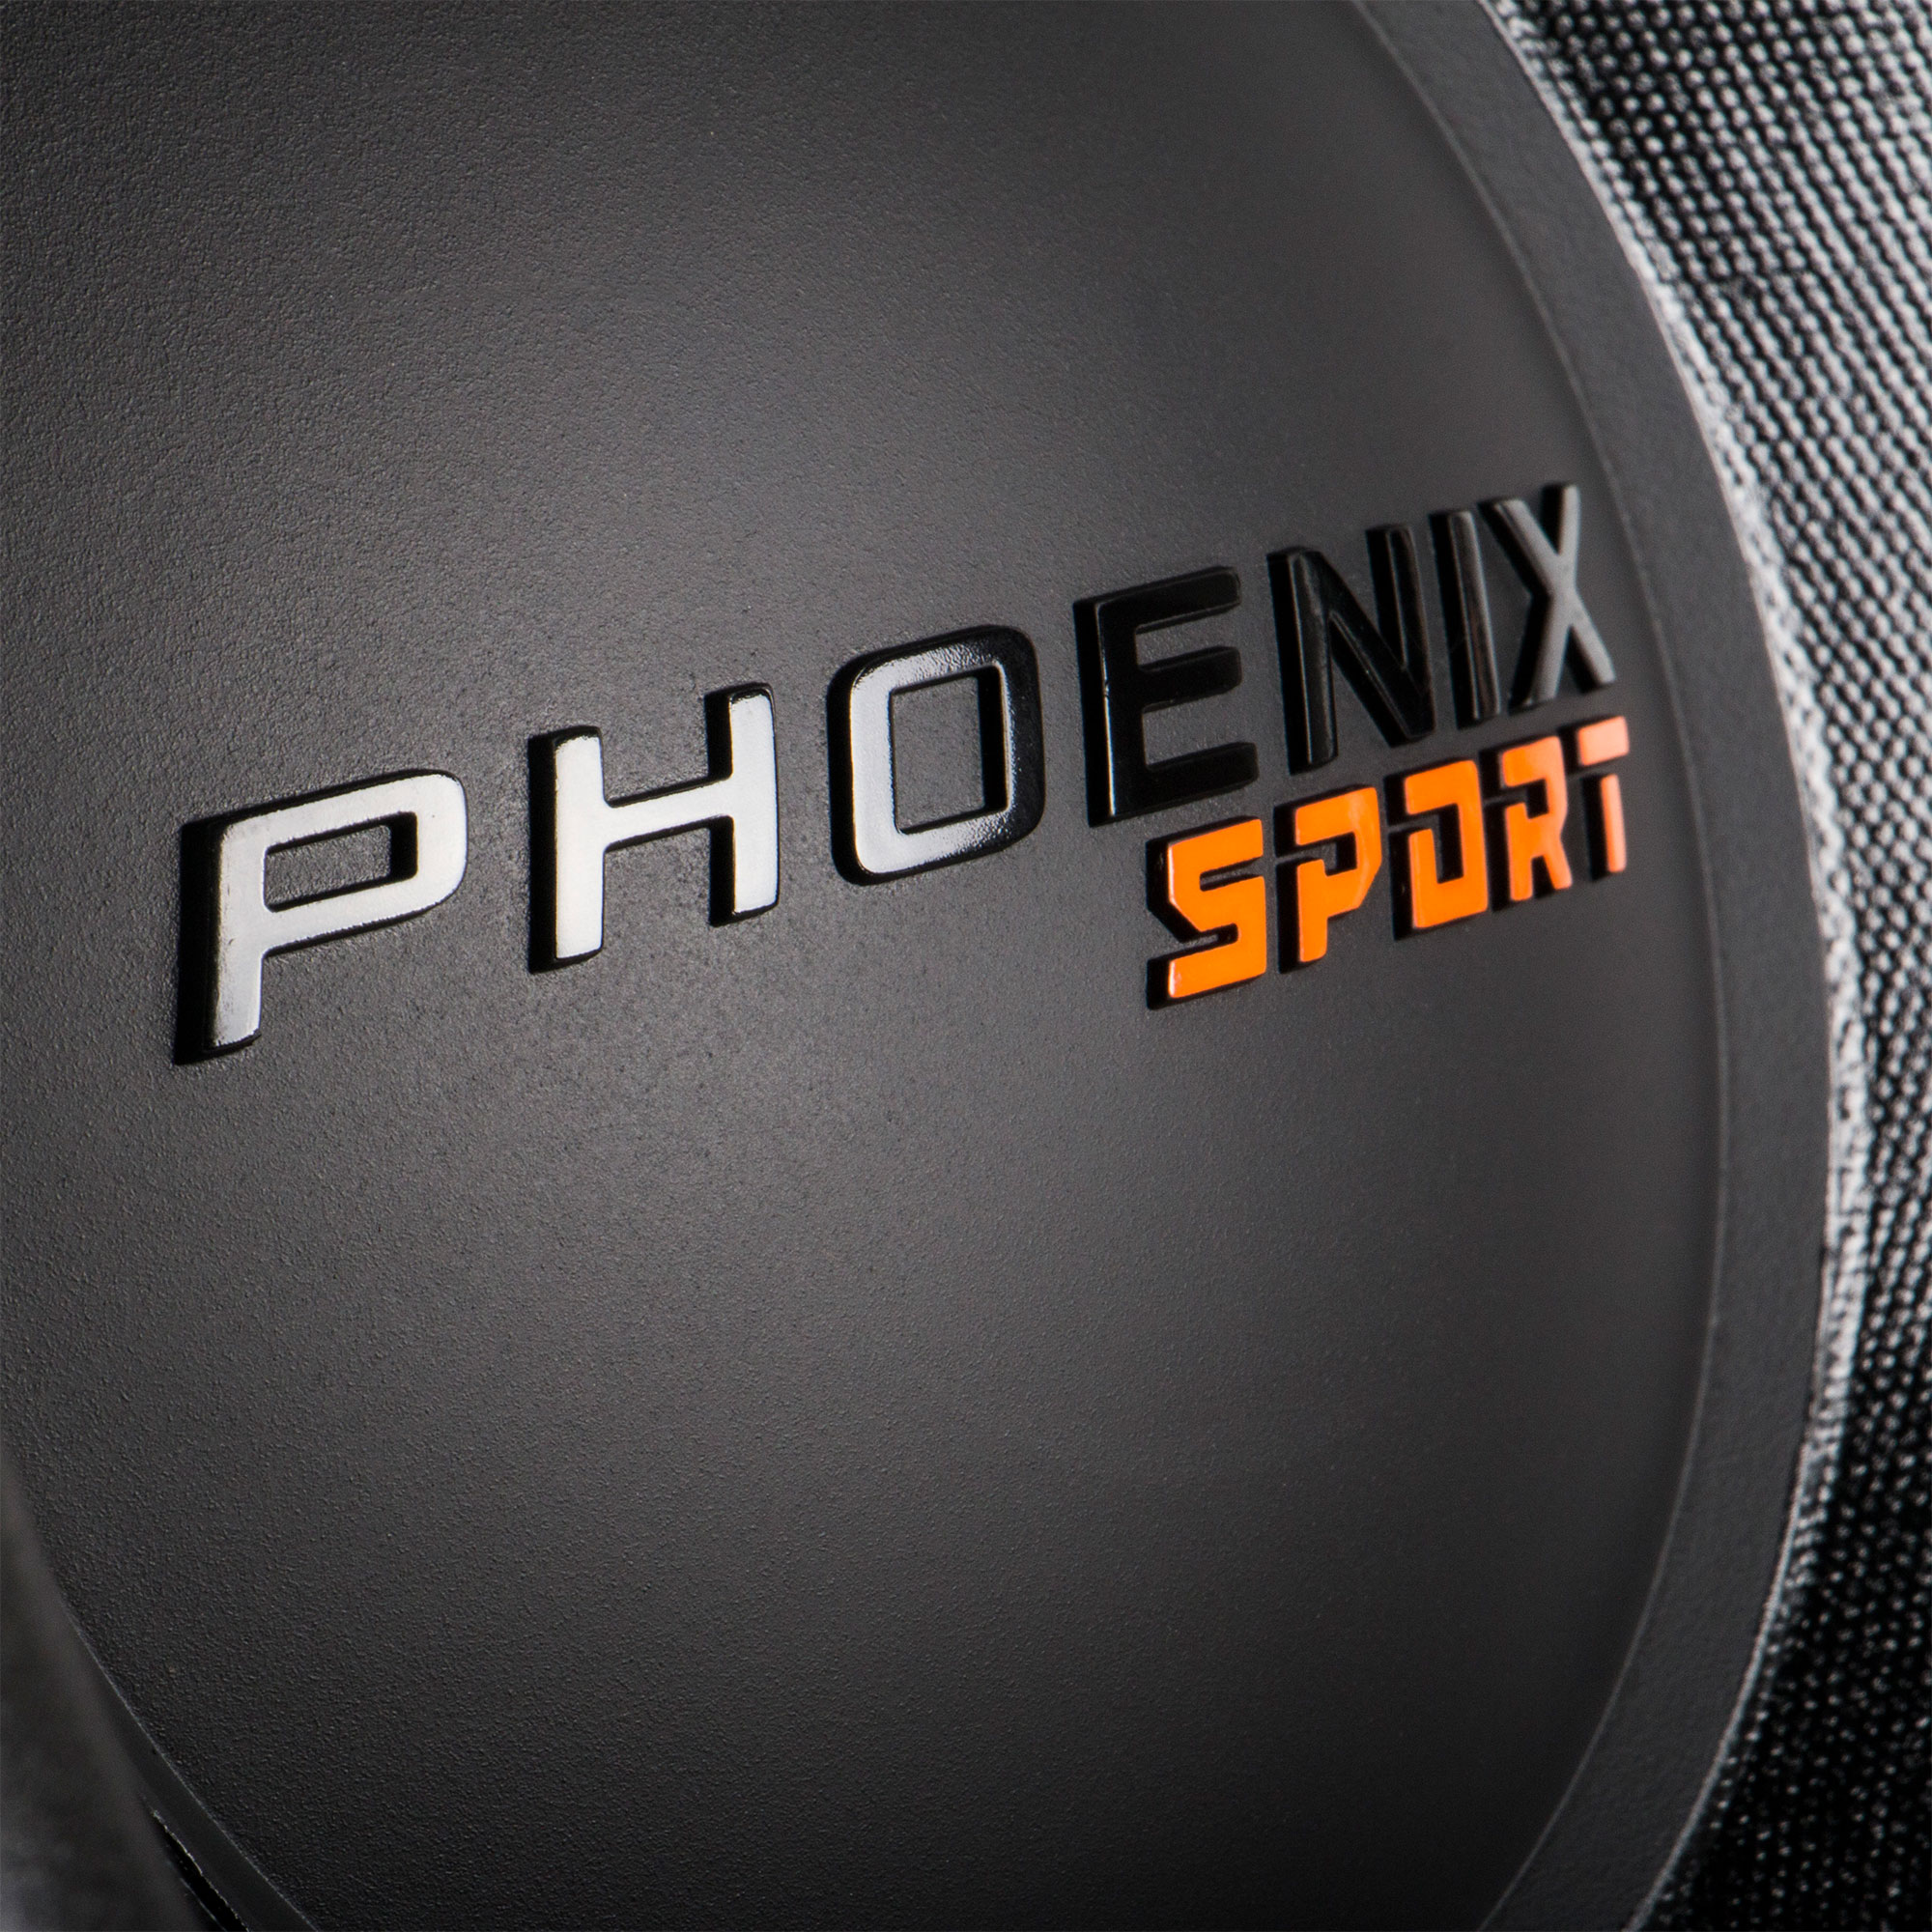 Phoenix sport 15